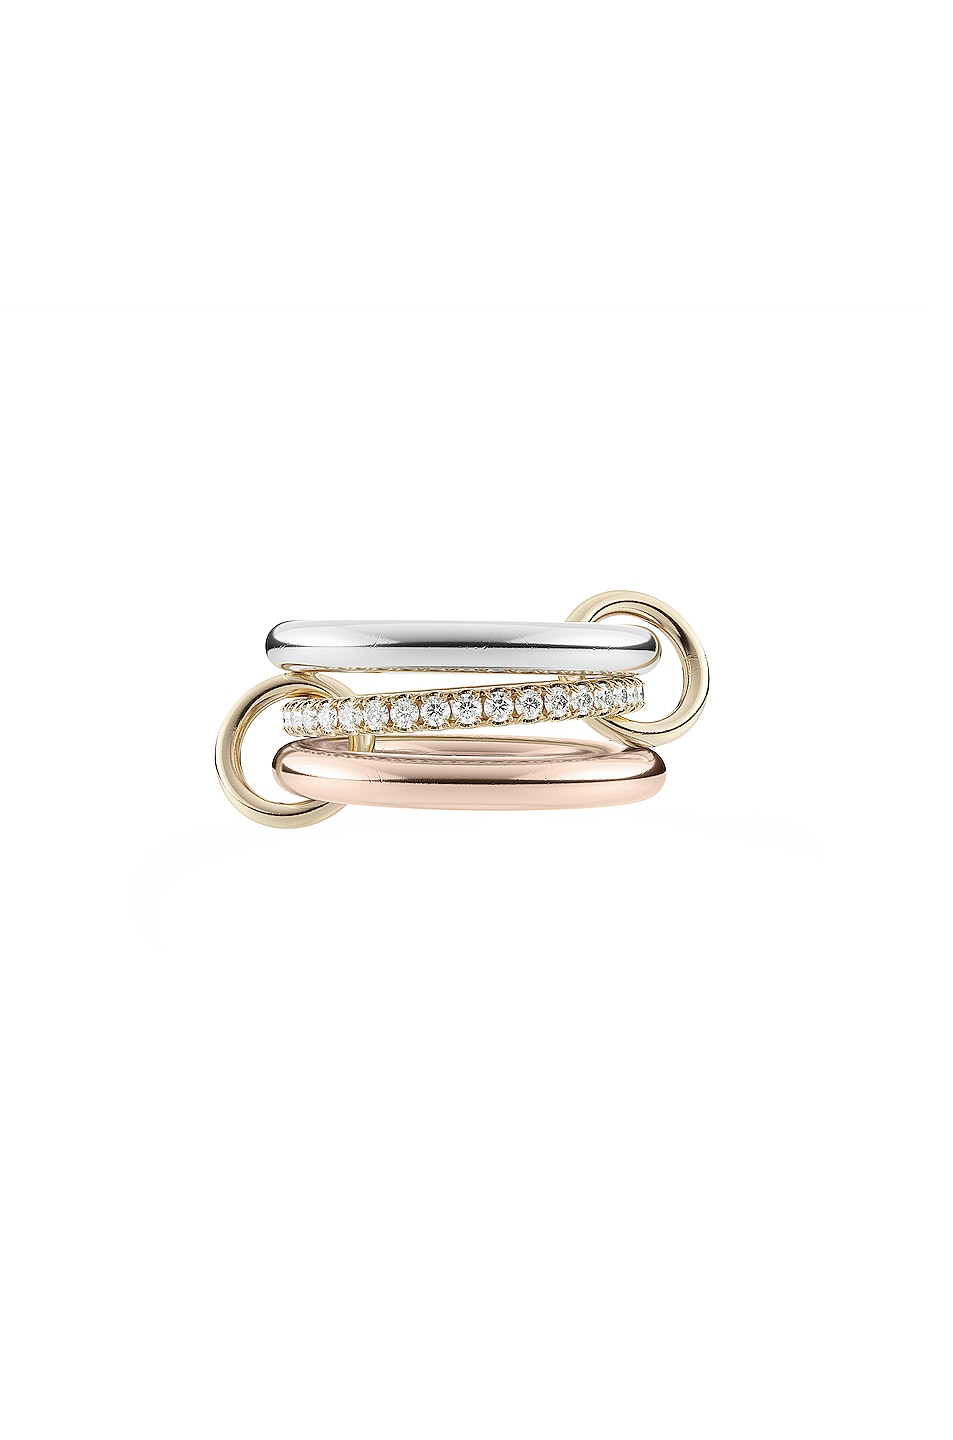 Image 1 of Spinelli Kilcollin Libra Petite Ring in 18K Rose Gold, Yellow Gold, Sterling Silver, & White Diamonds